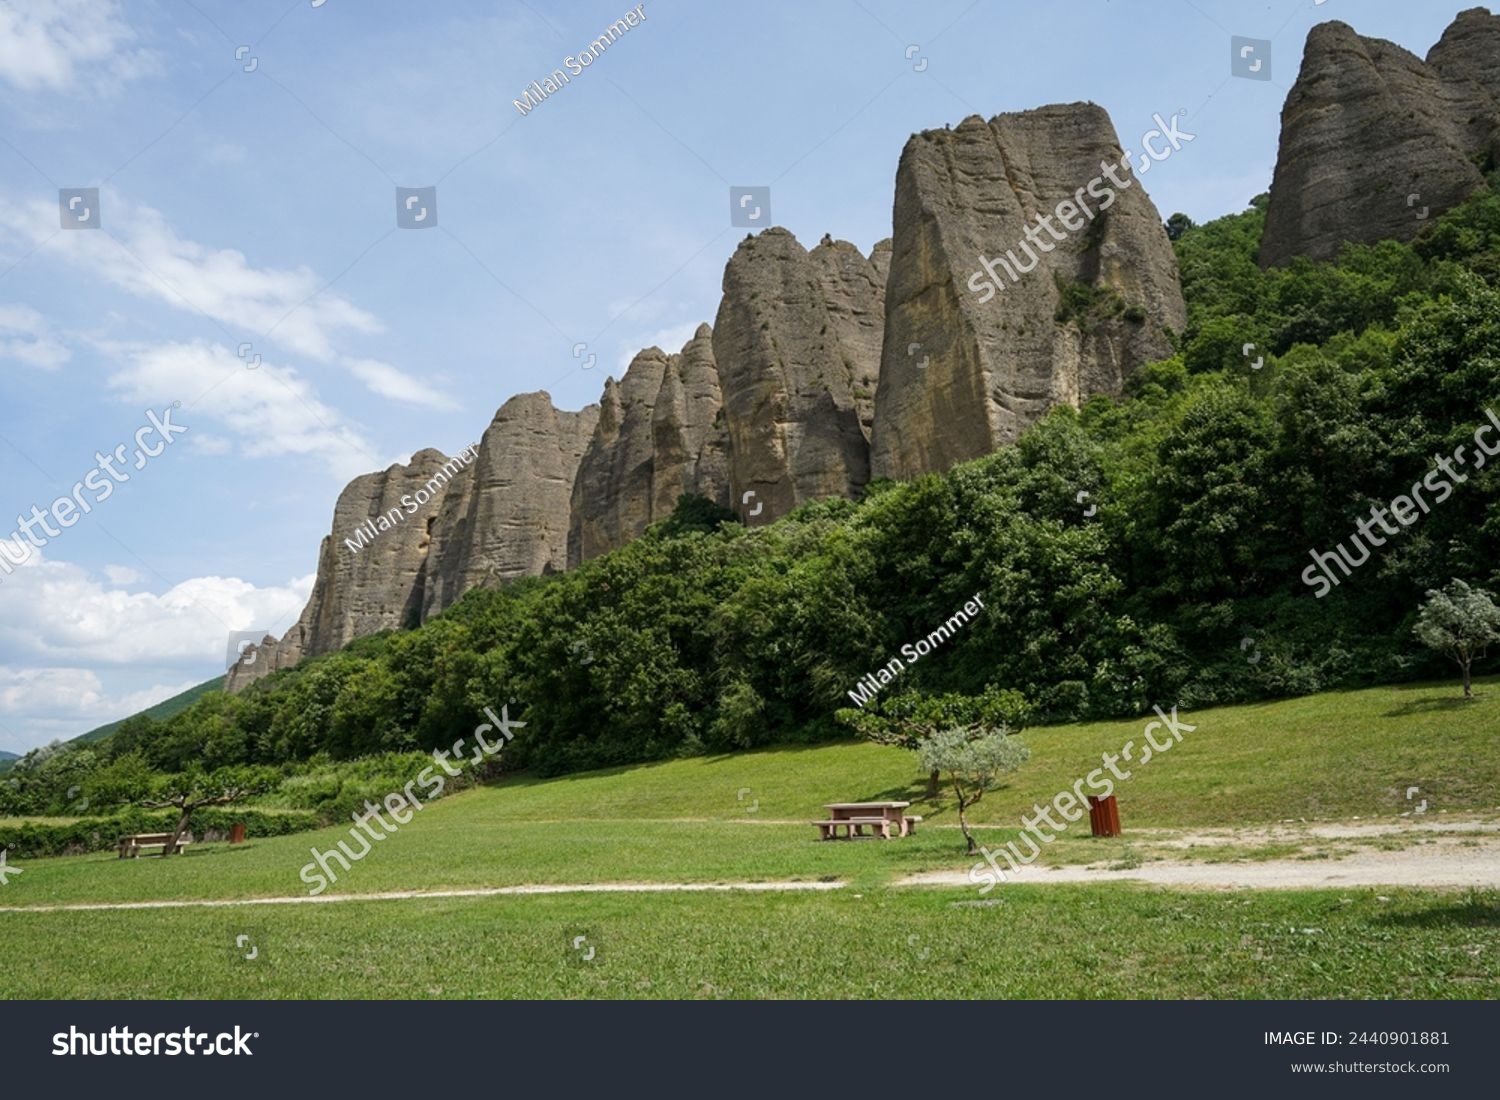 Penitents des Mees, interesting rock cliffs above village Mees, tourist landmark in France #2440901881